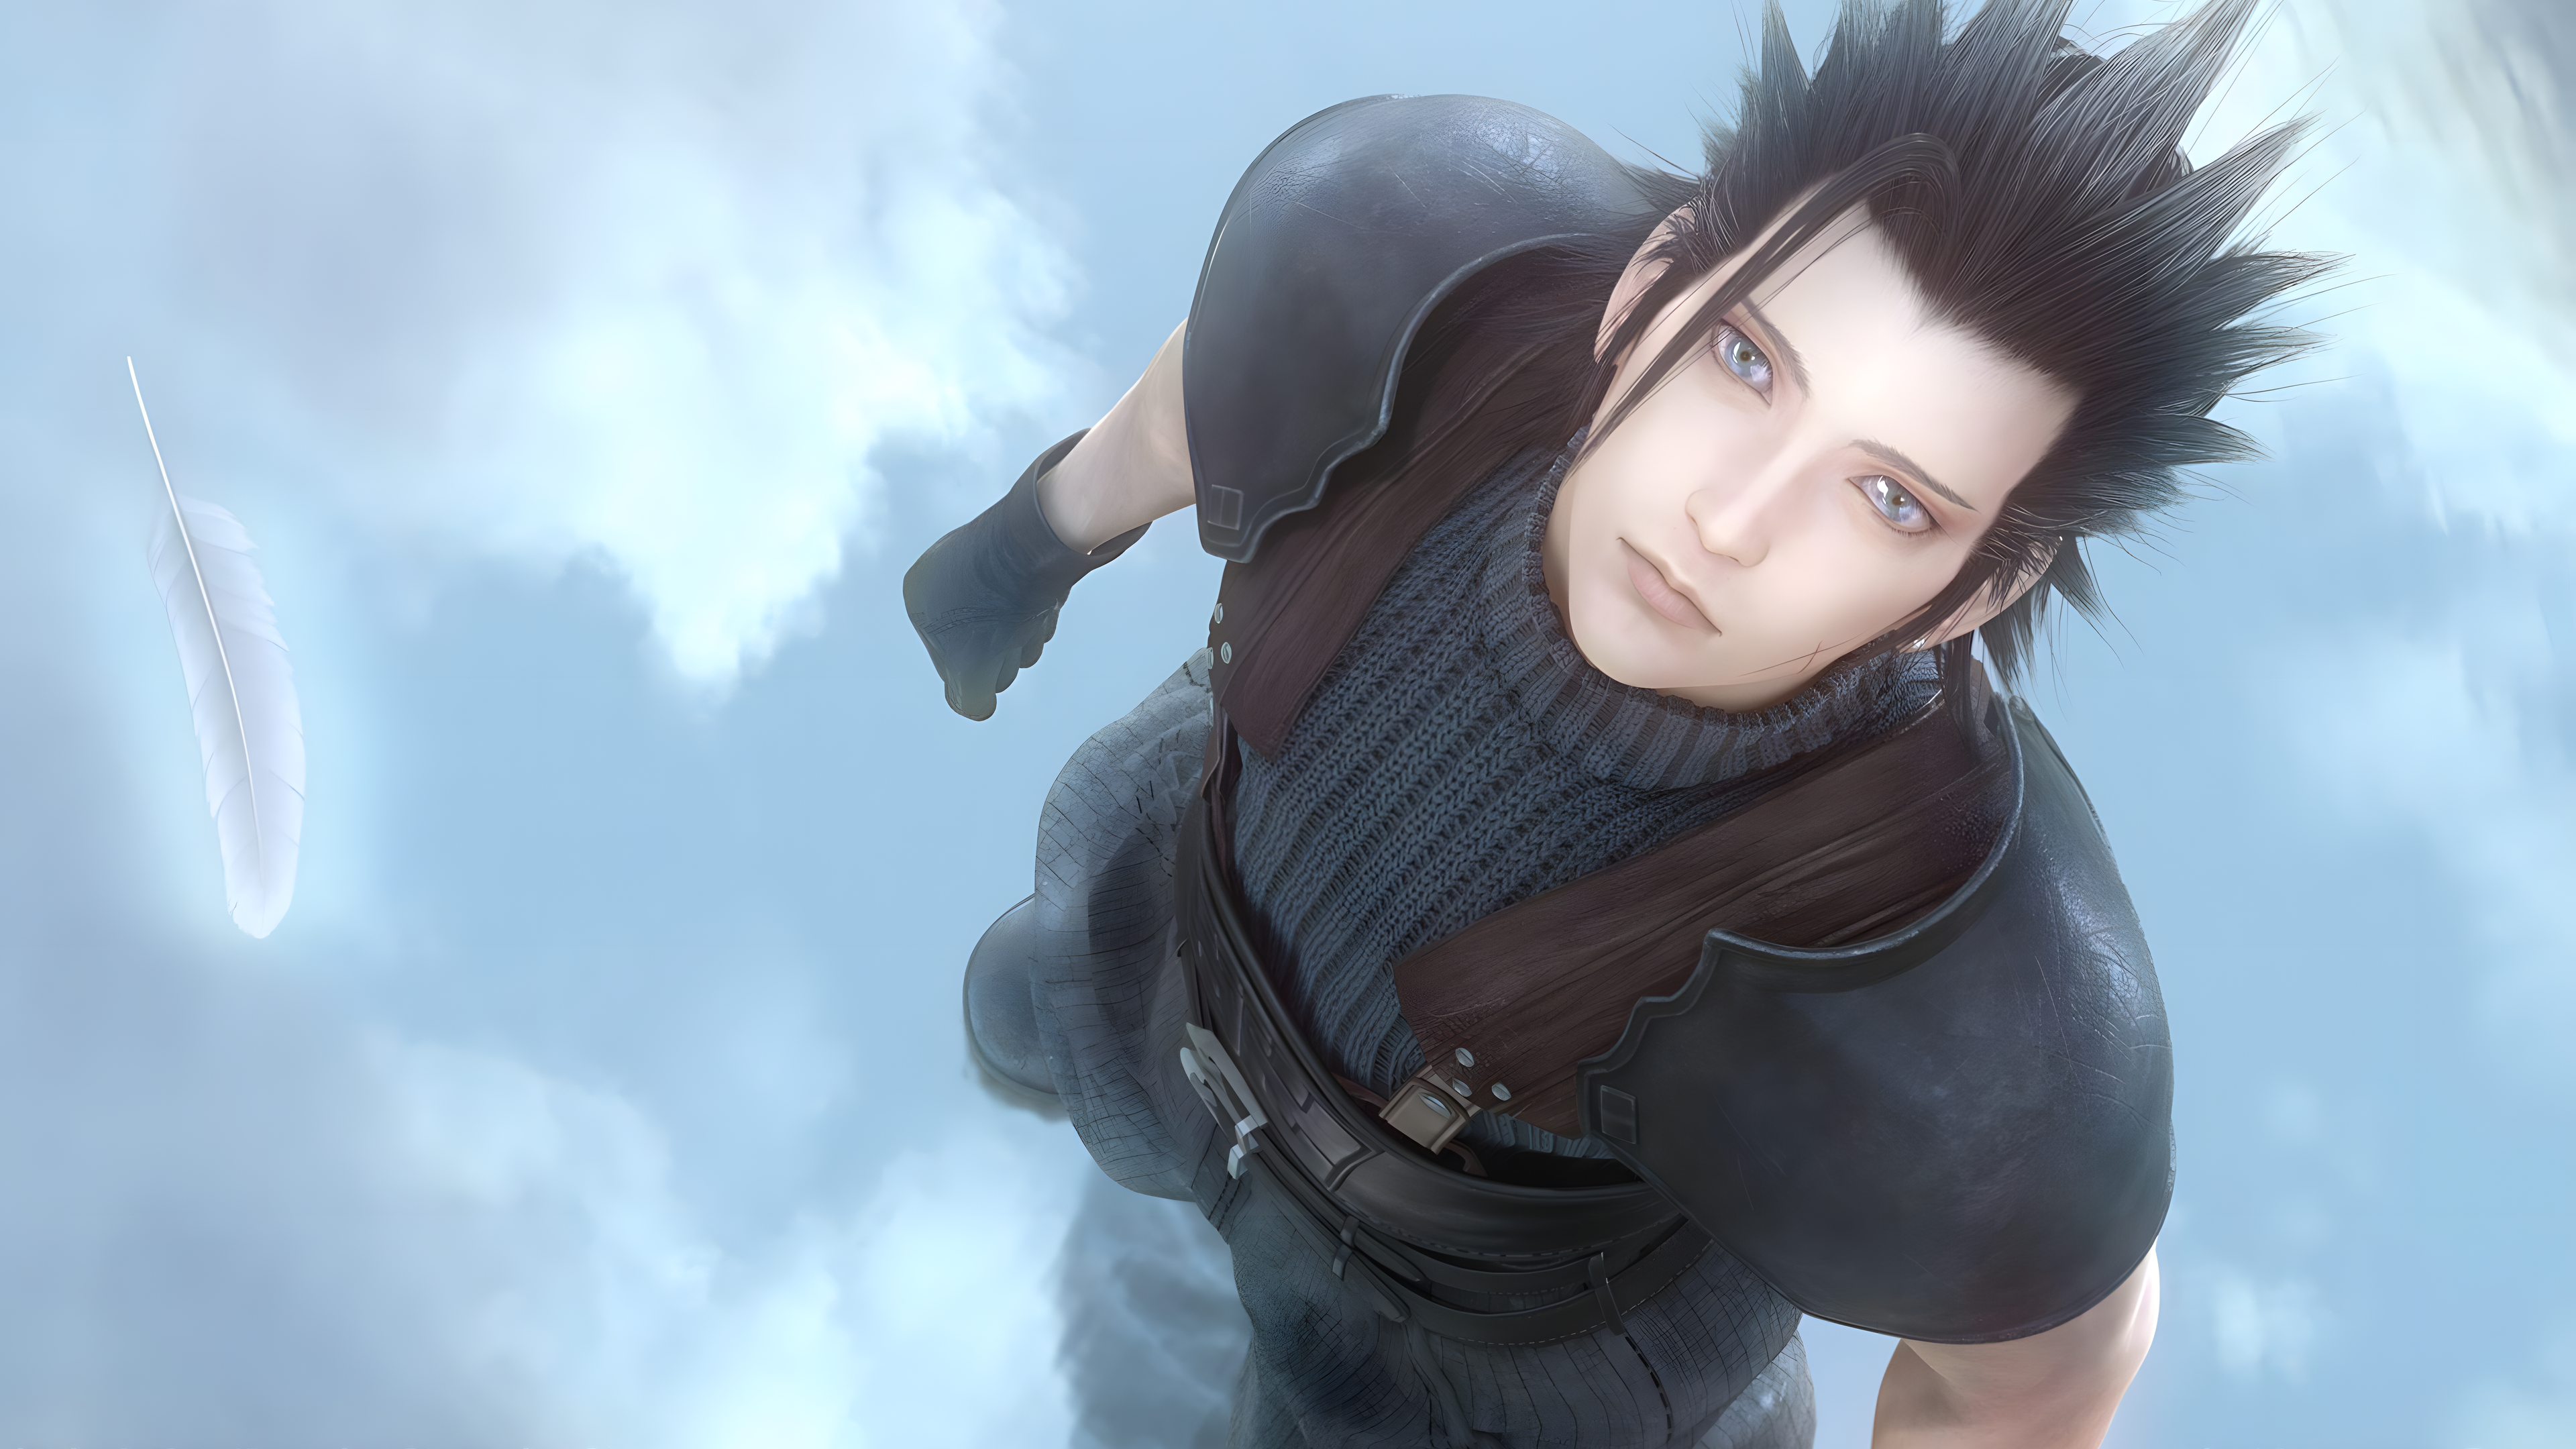 General 3840x2160 Zack Fair Final Fantasy VII video game characters dark hair sky